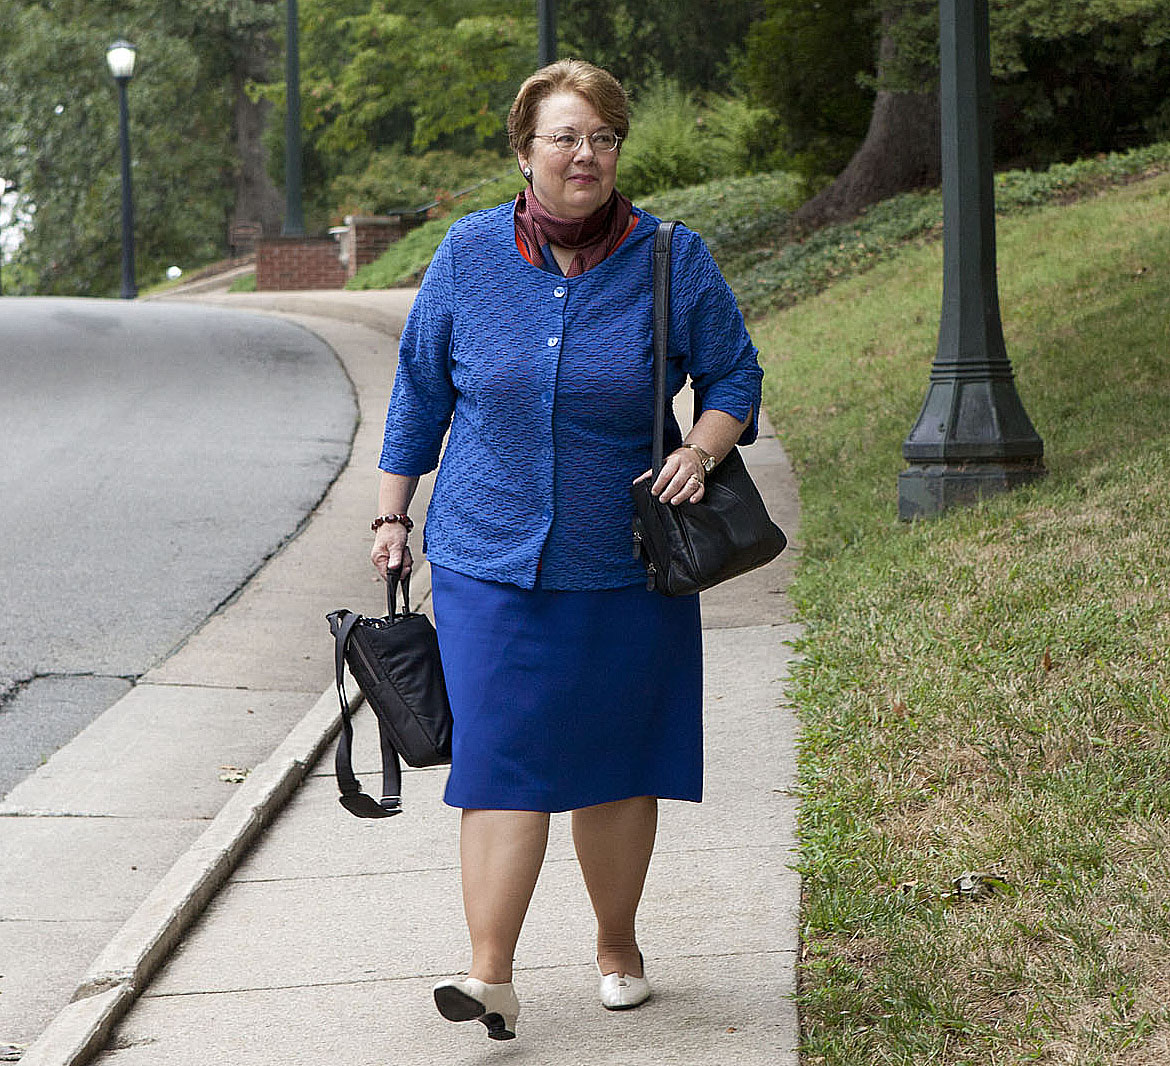 Teresa A. Sullivan walking on a sidewalk carrying her bags